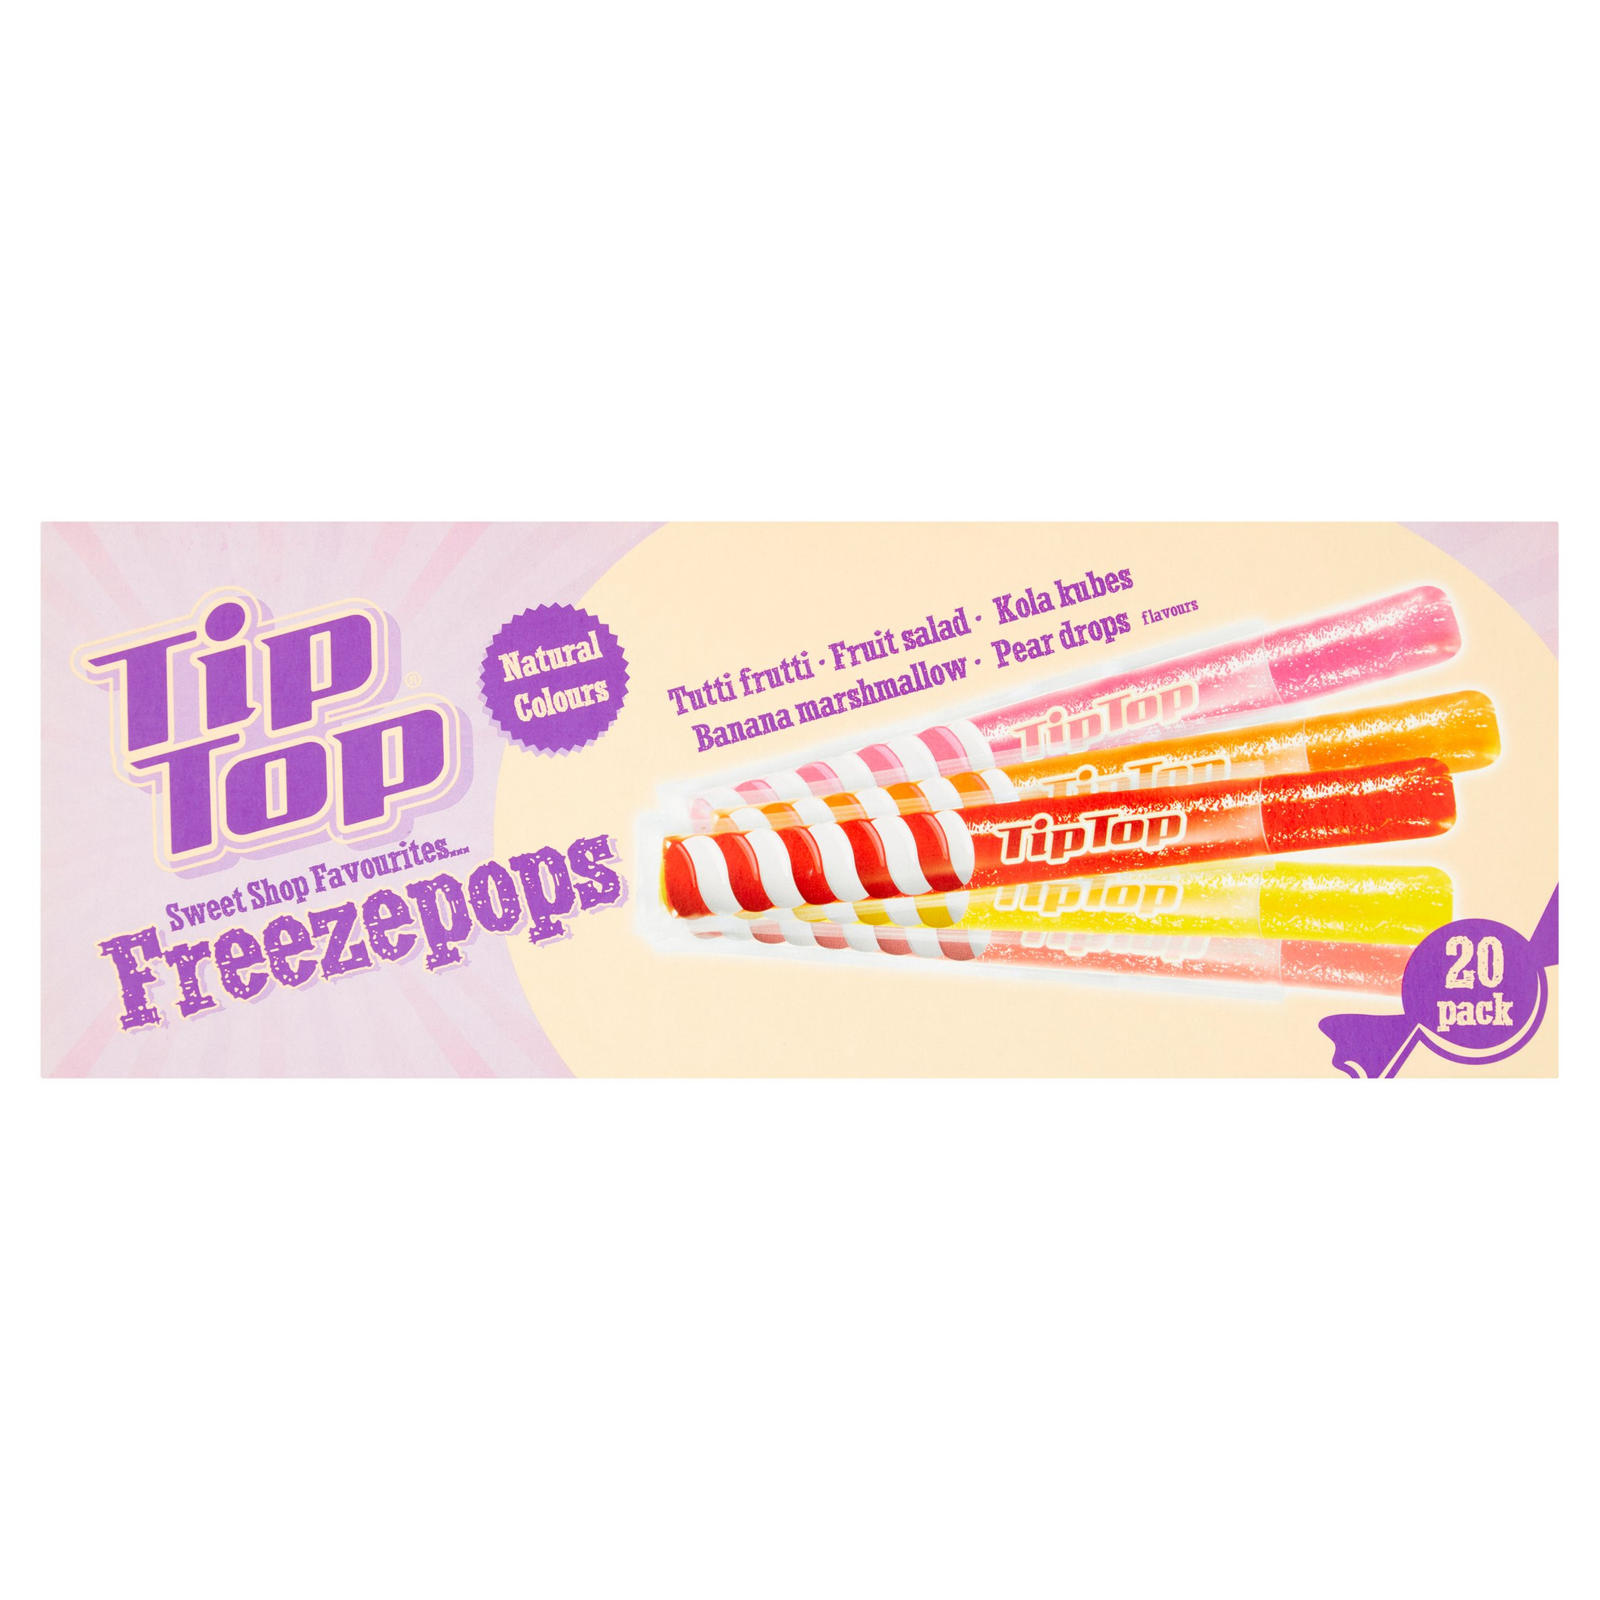 Tip Top Sweet Shop Favourites Freezepops 20 x 45ml (900ml)